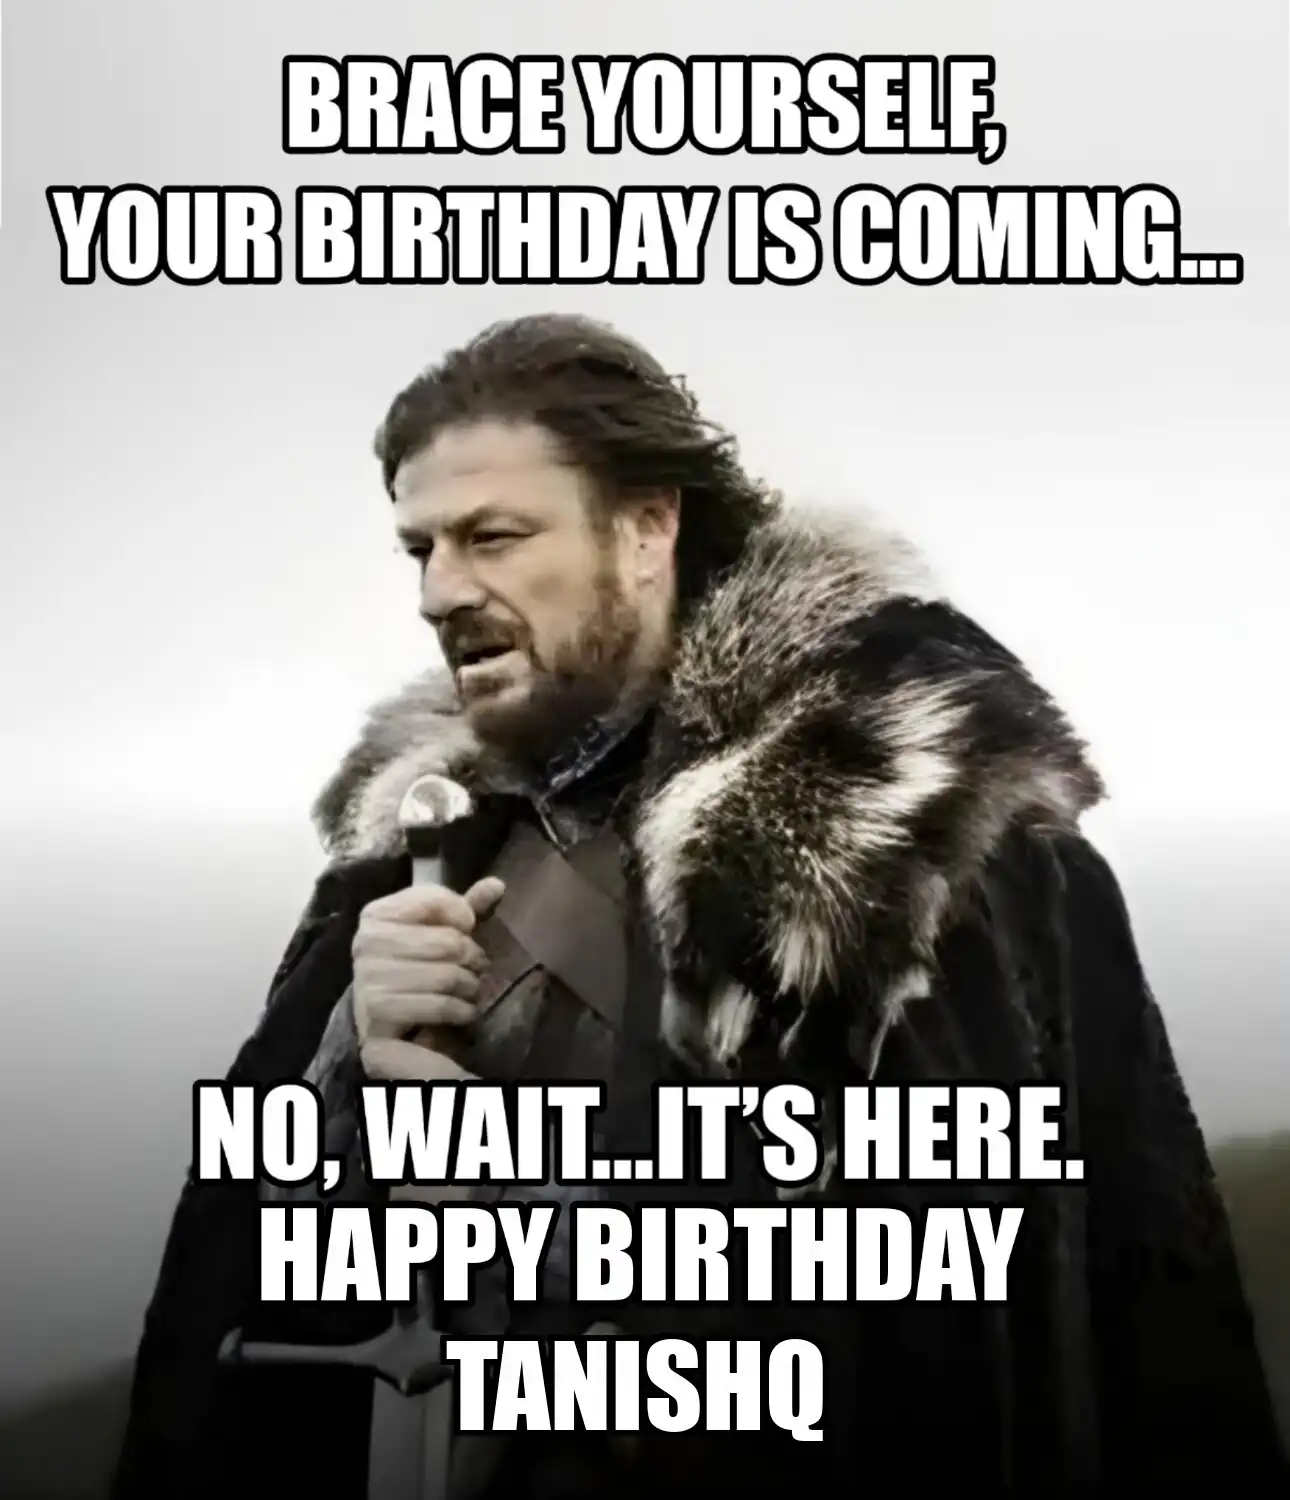 Happy Birthday Tanishq Brace Yourself Your Birthday Is Coming Meme